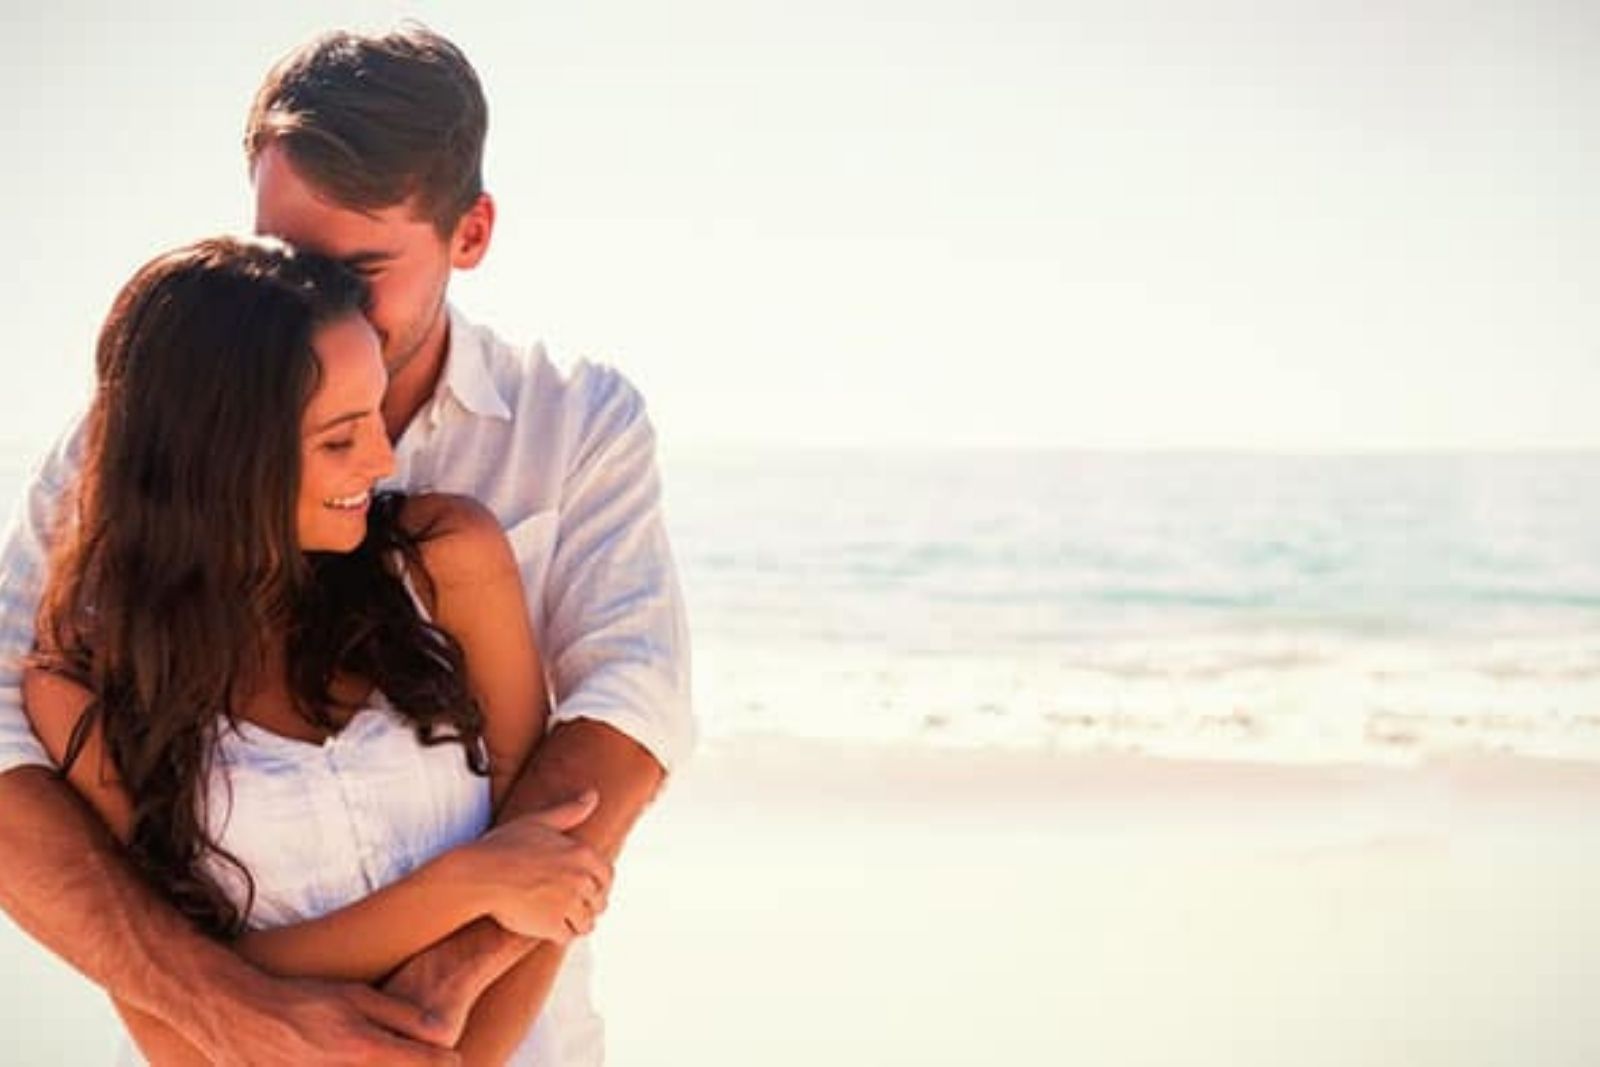 a man hugging a woman on the beach